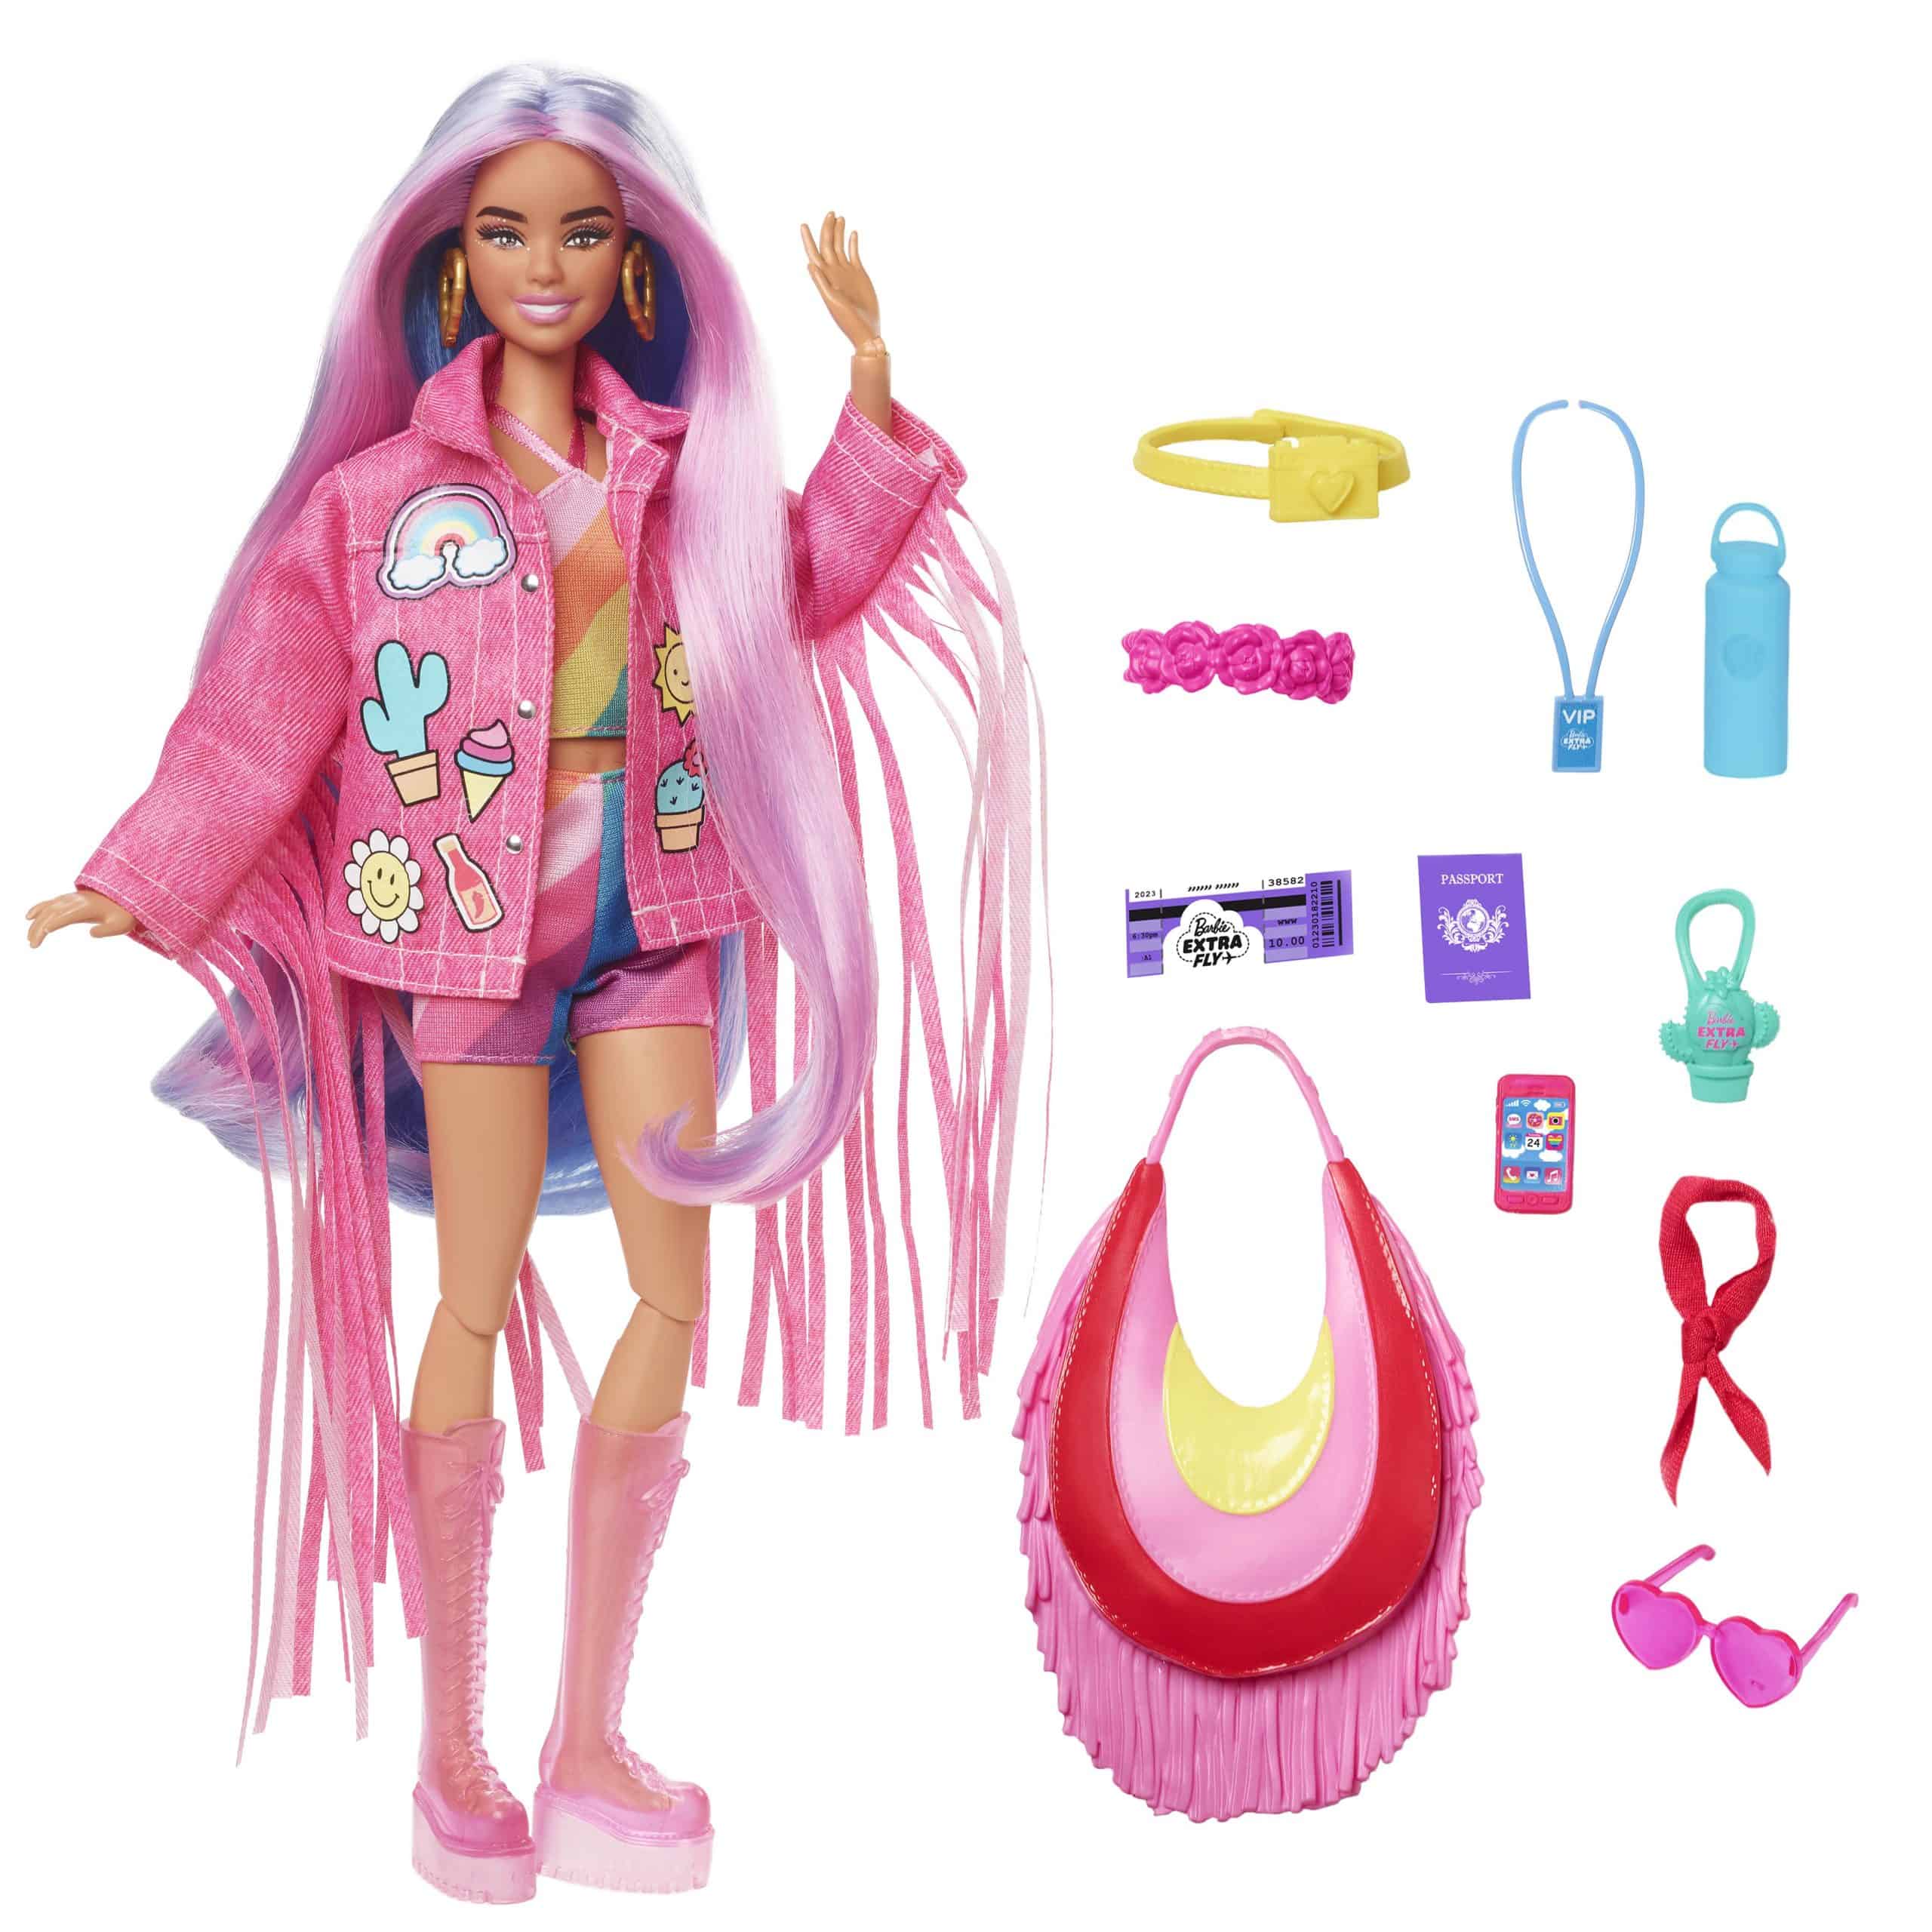 Barbie Extra Fly - Έρημος